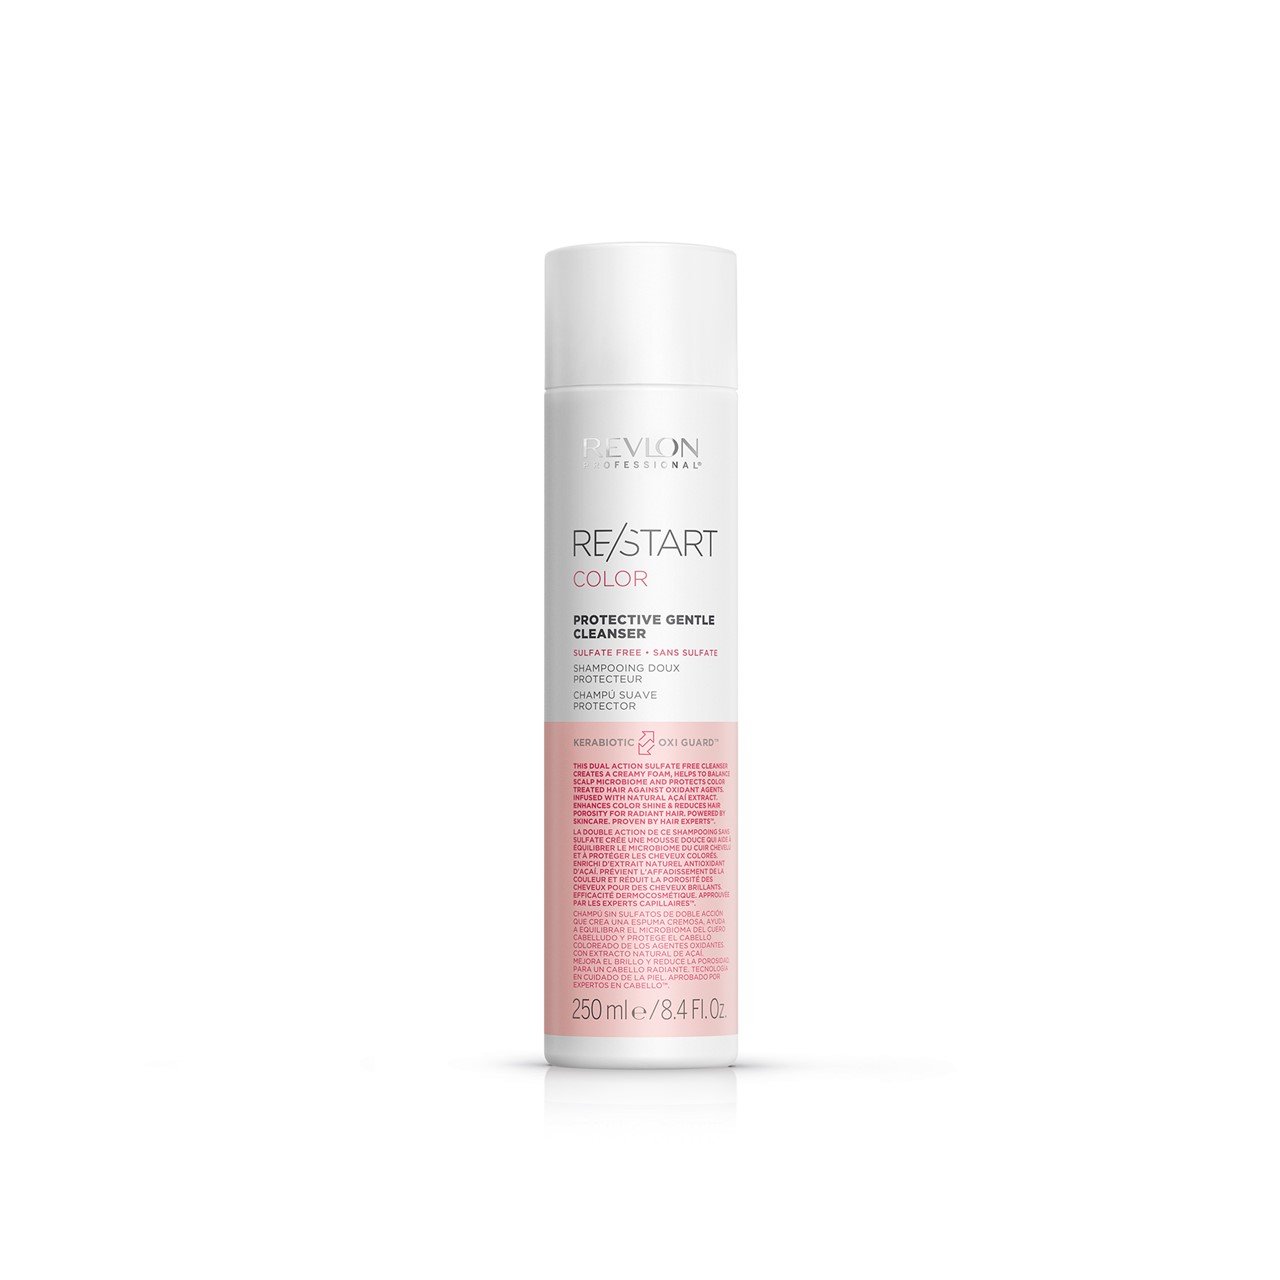 Revlon Professional Re/Start Color Protective Gentle Cleanser Shampoo